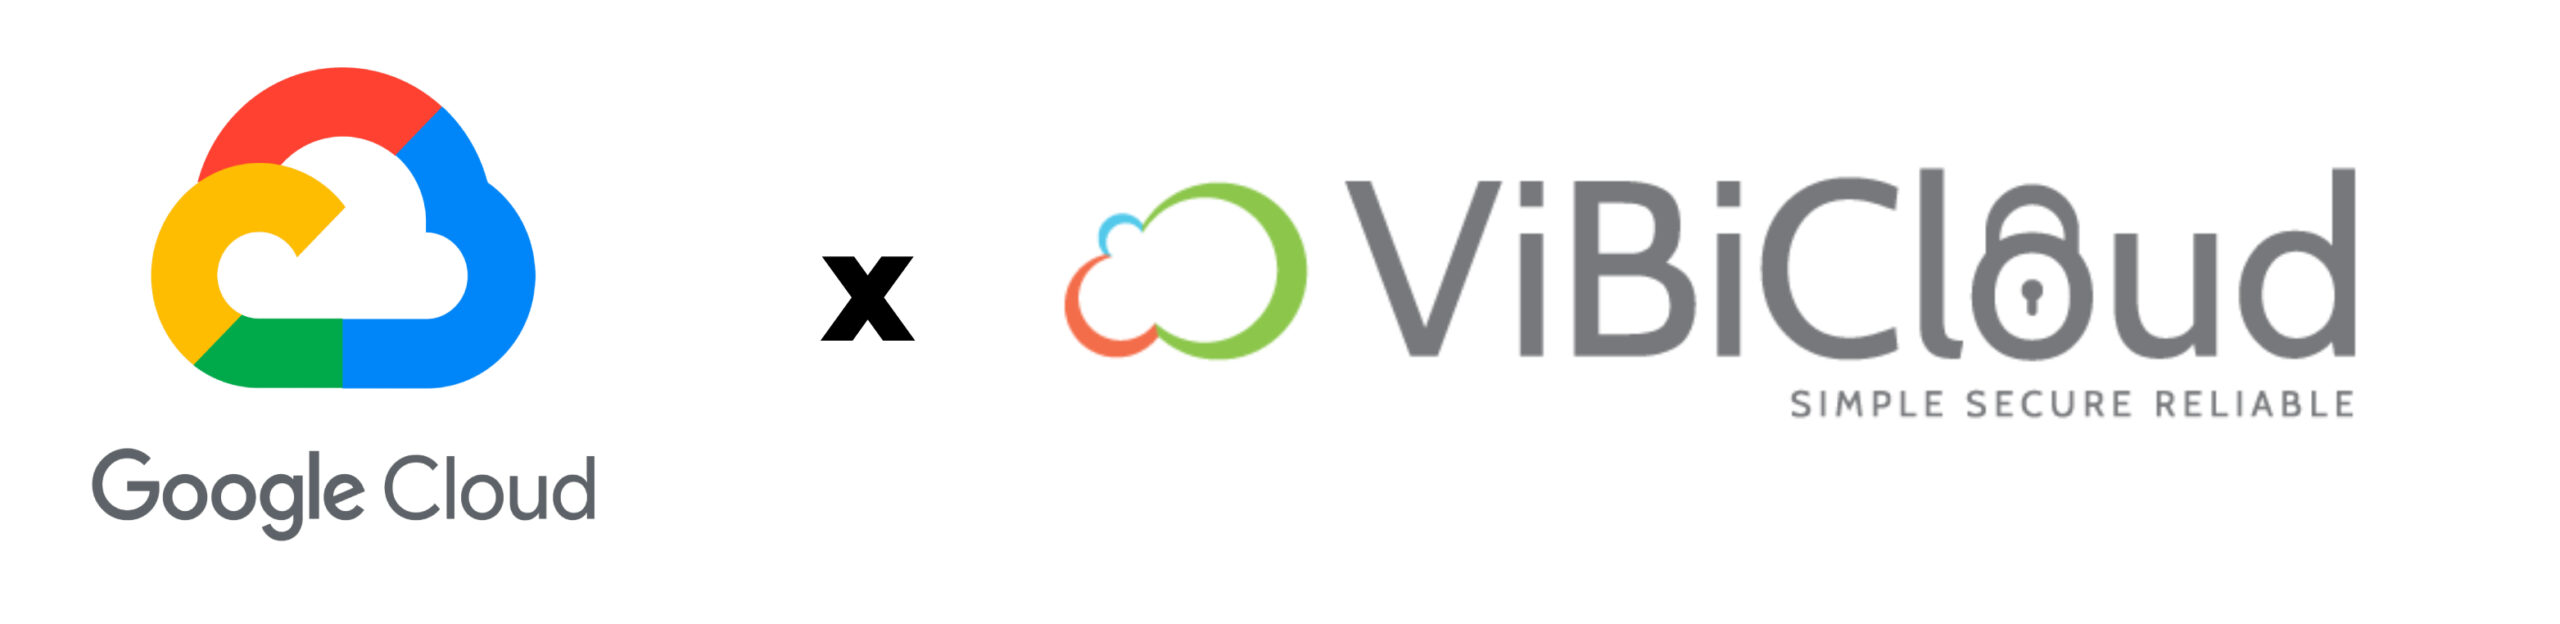 Google-Cloud-x-vibicloud logo